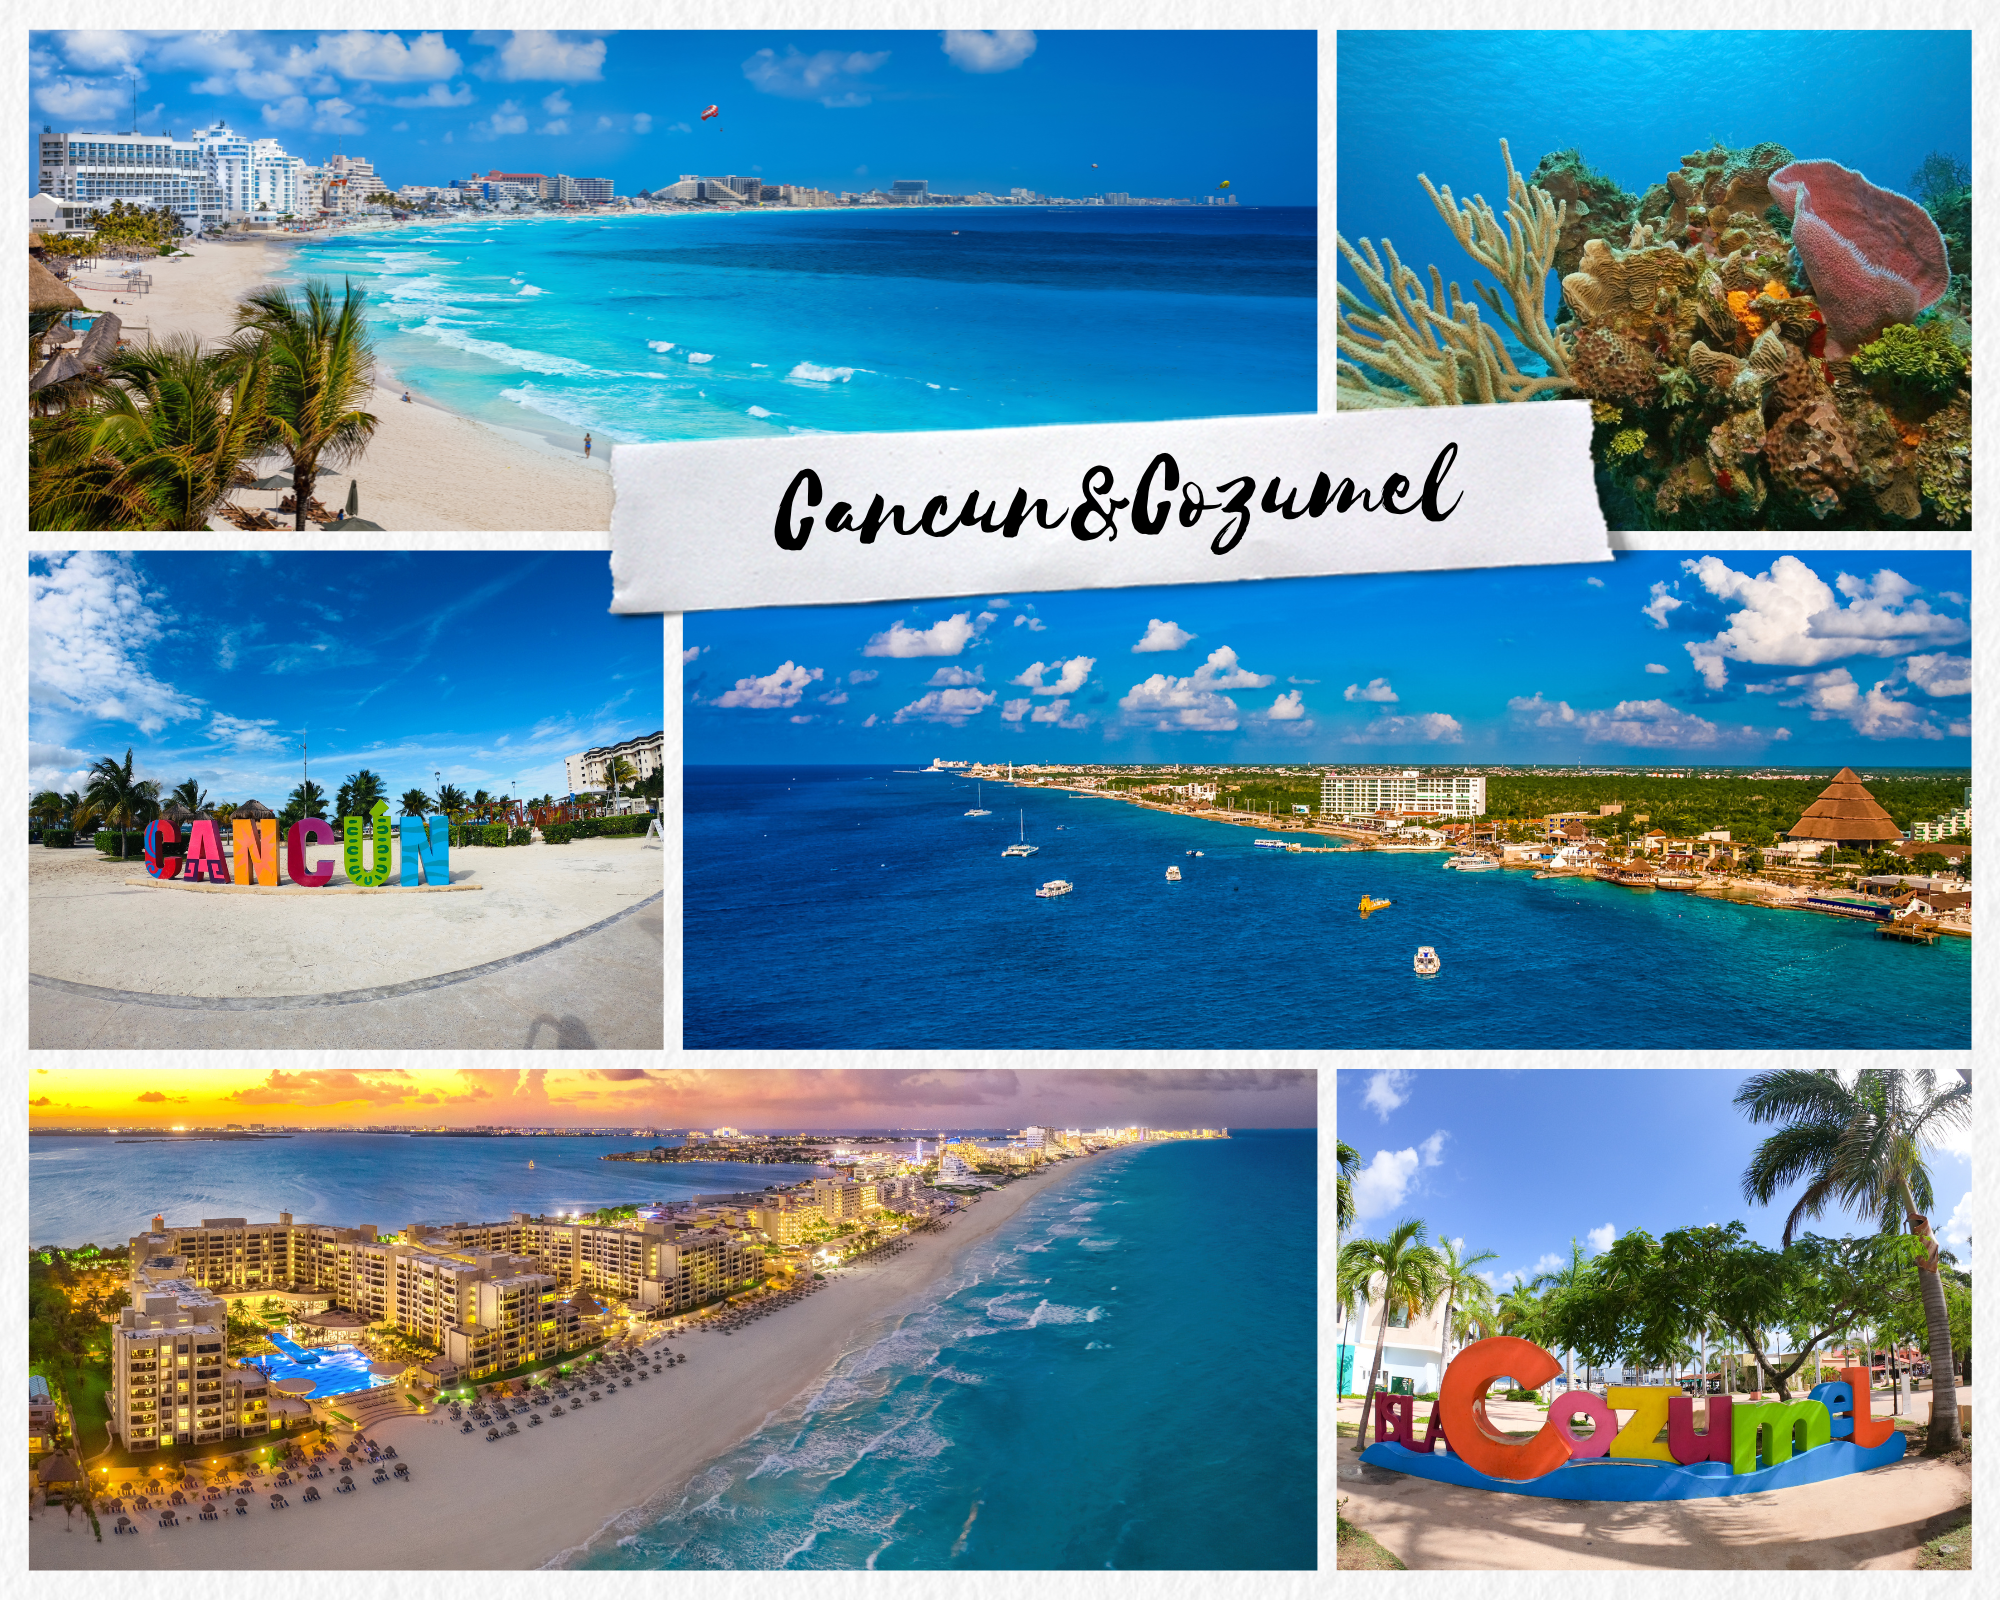 Cancun & Cozumel Western Caribbean Islands